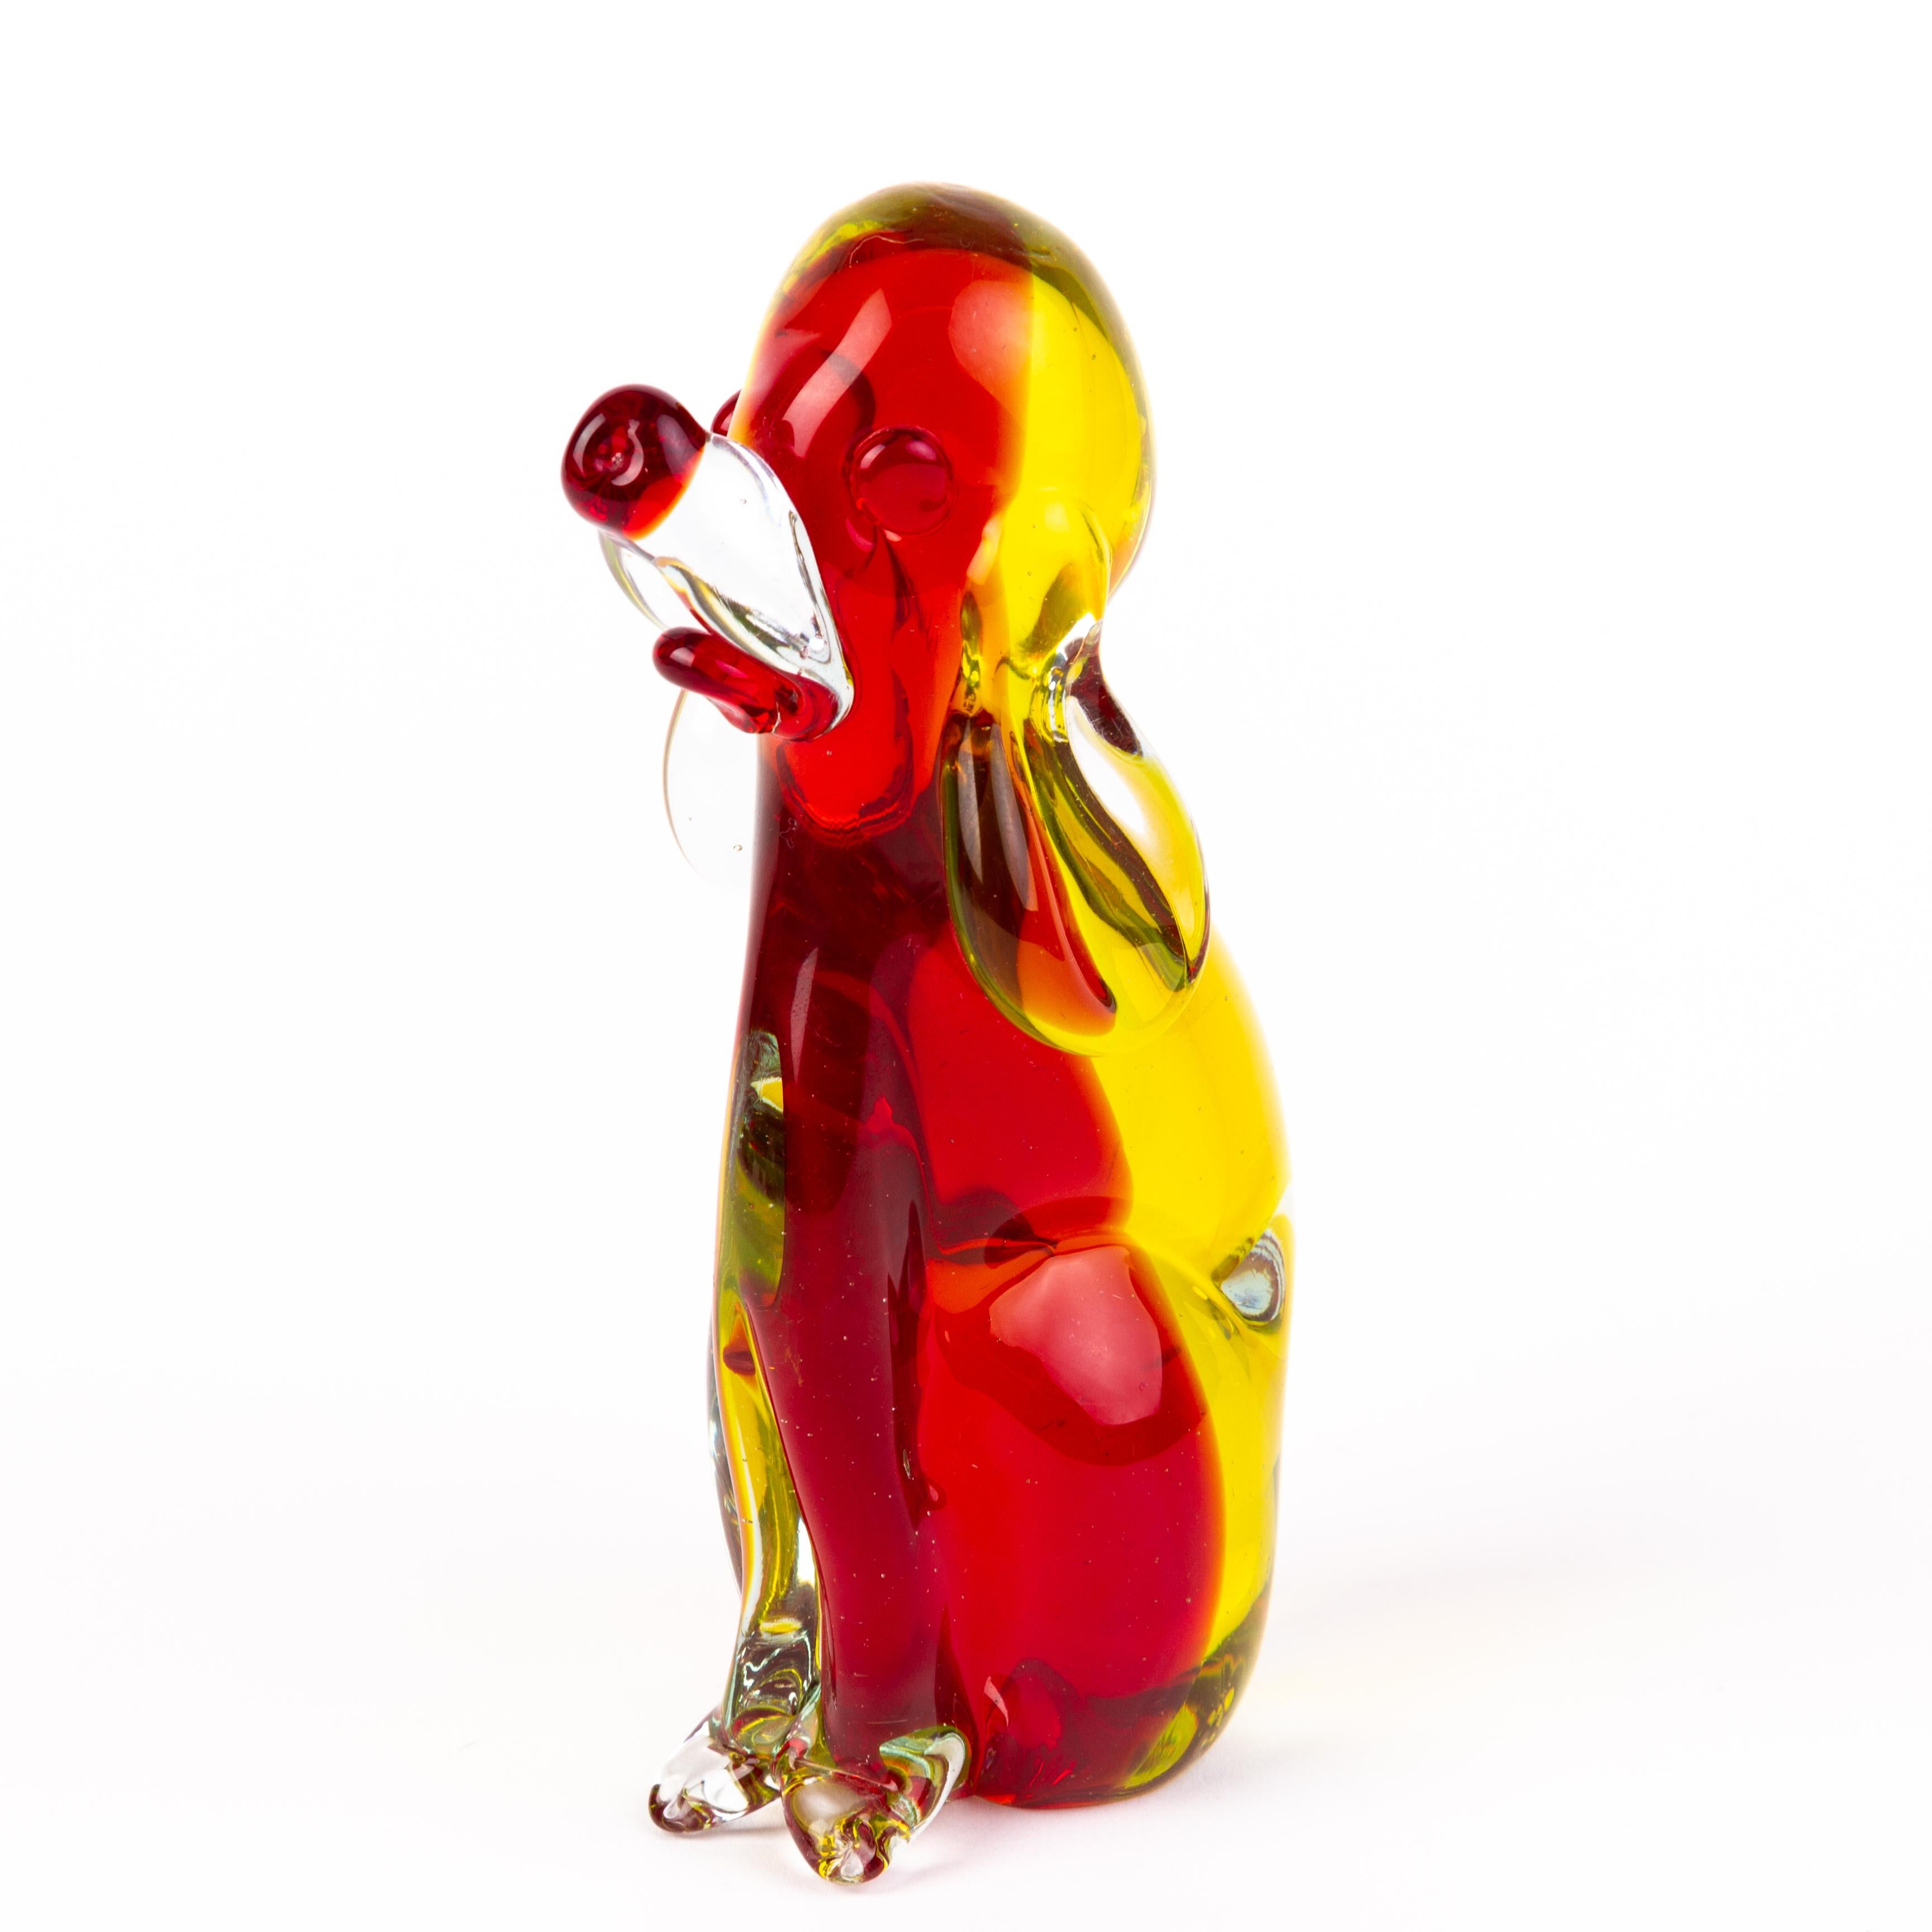 Murano Venetian Glass Sculpture Dog
Good condition
Free international shipping.